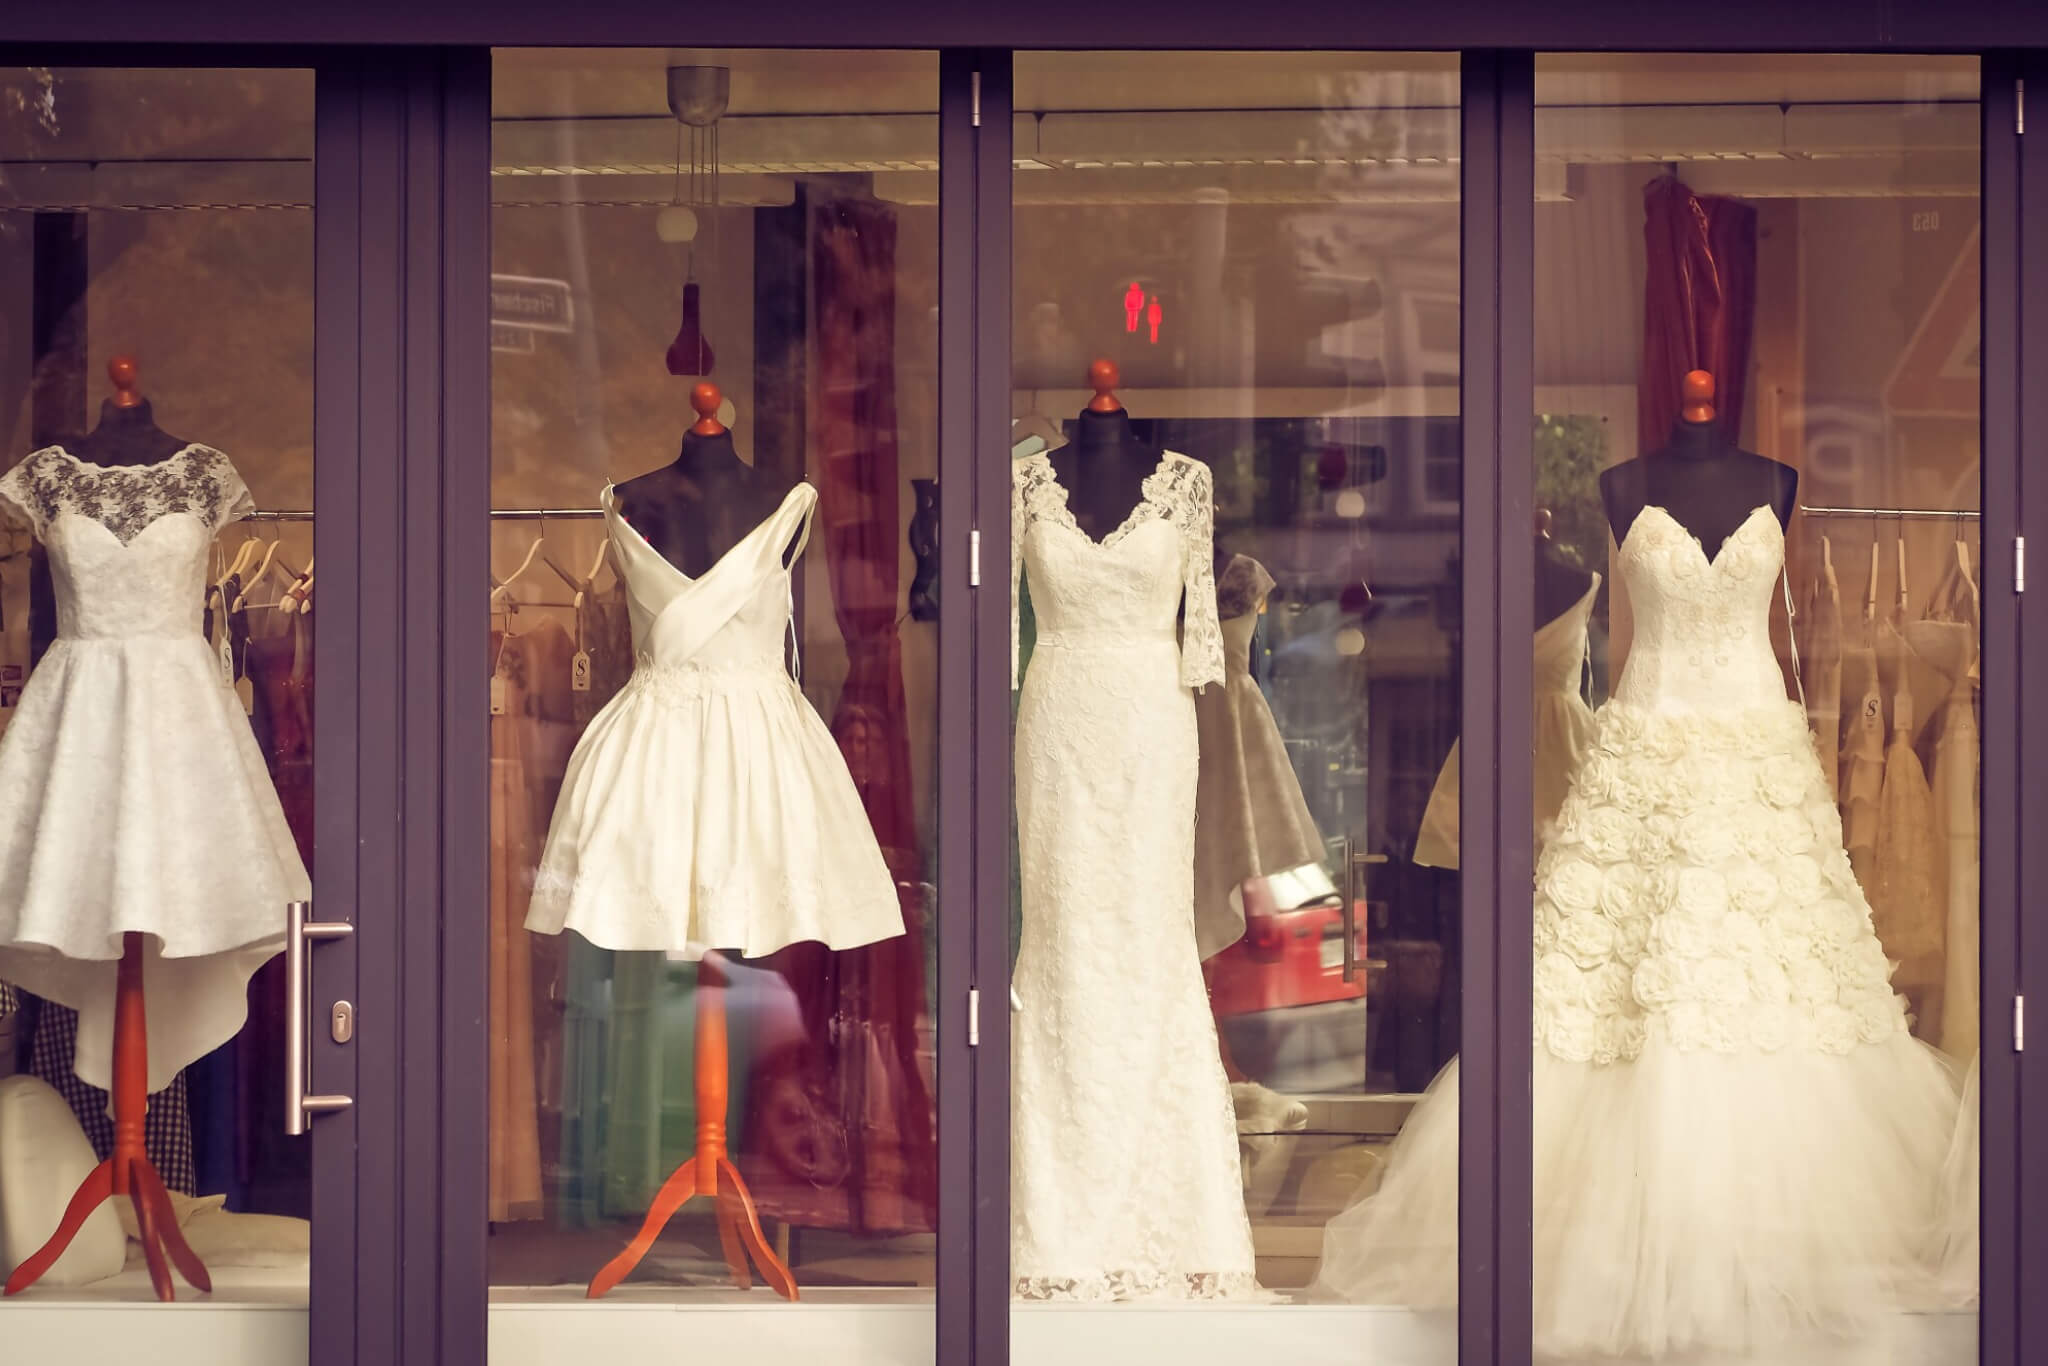 bridal shop business plan